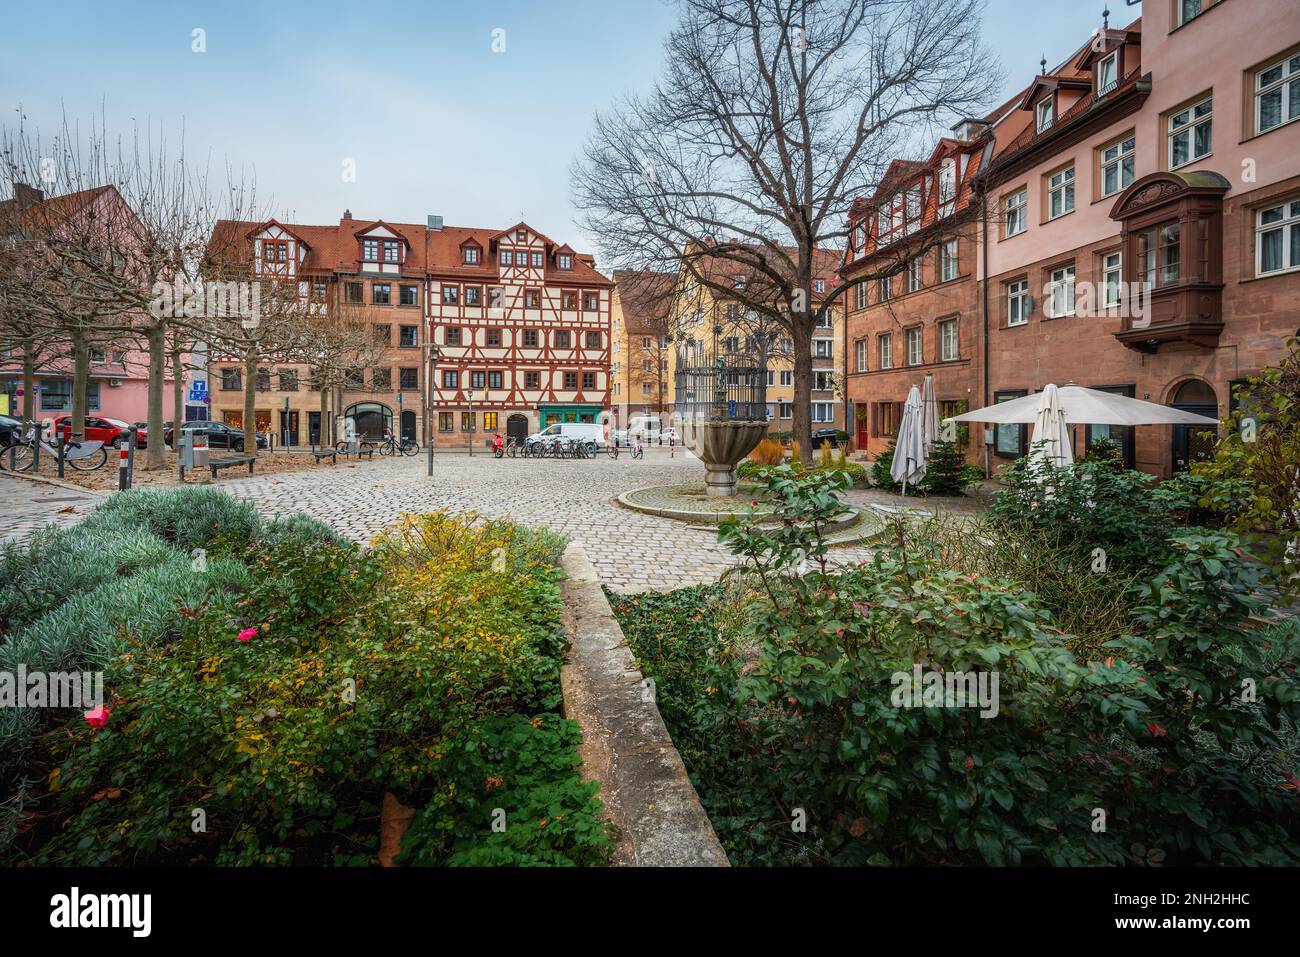 Unschlittplatz Square - Nuremberg, Bavaria, Germany Stock Photo